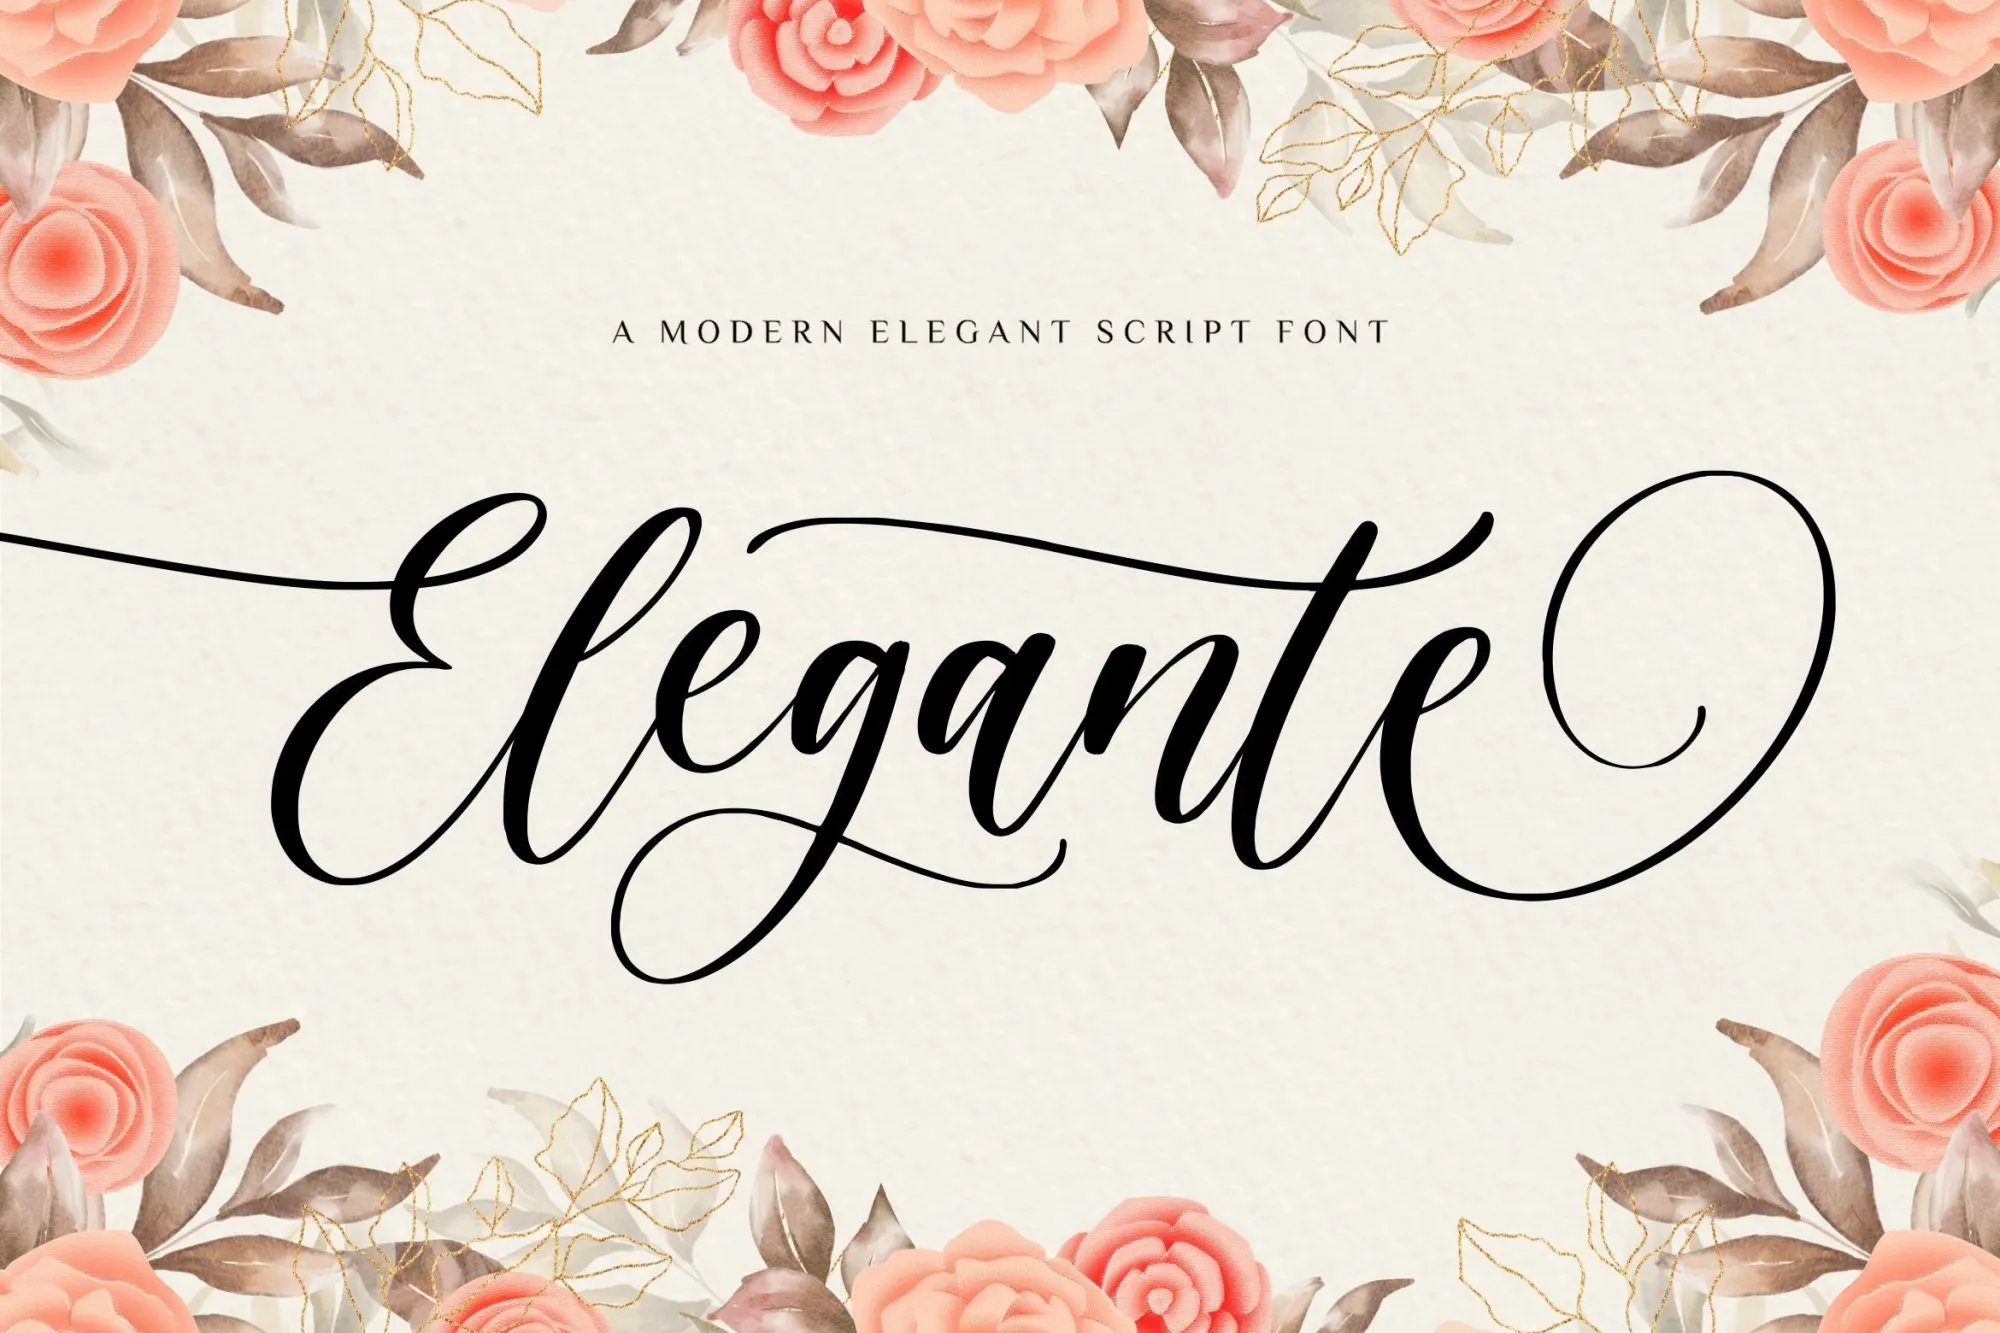 Elegante Font